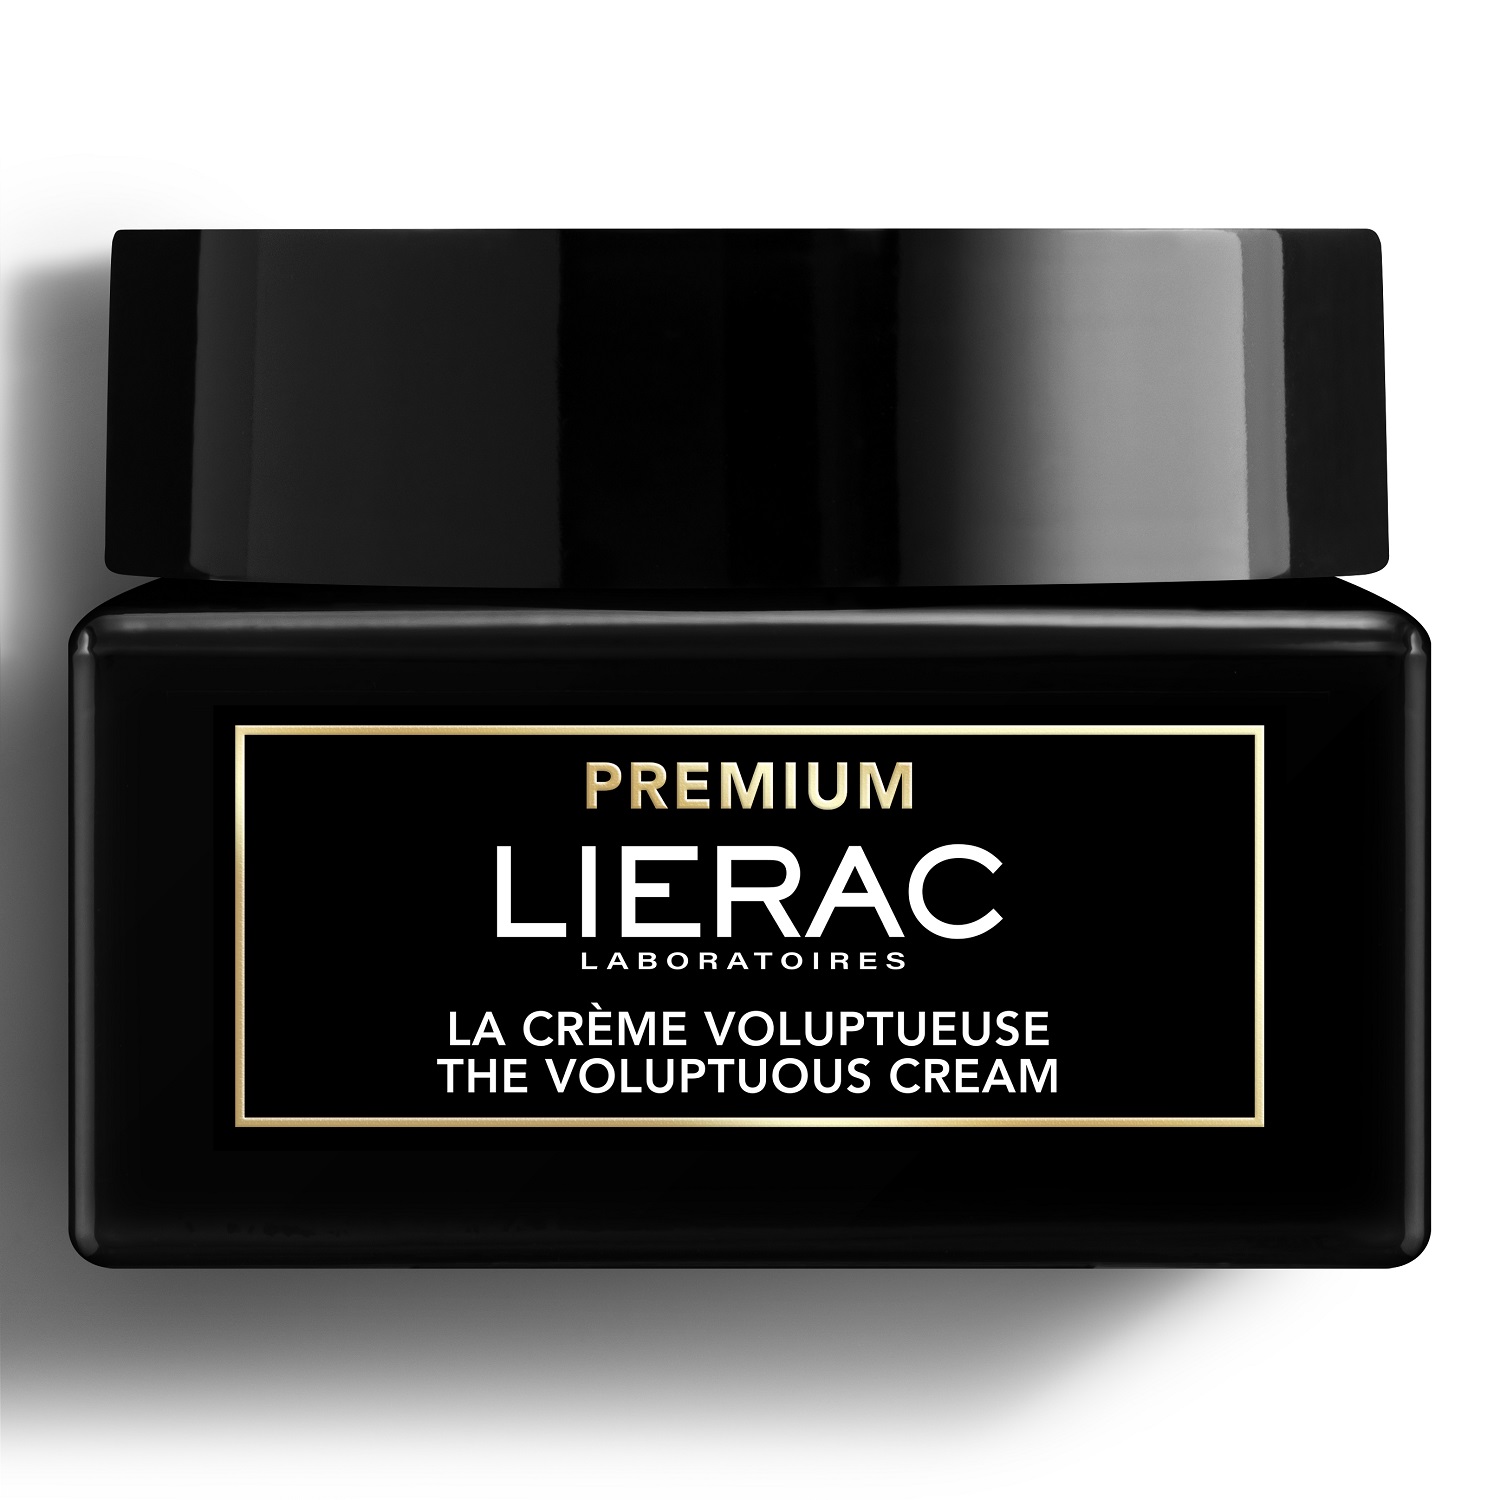 Lierac Насыщенный крем для лица, 50 мл (Lierac, Premium) lierac бархатистый крем для лица сменный блок 50 мл lierac premium